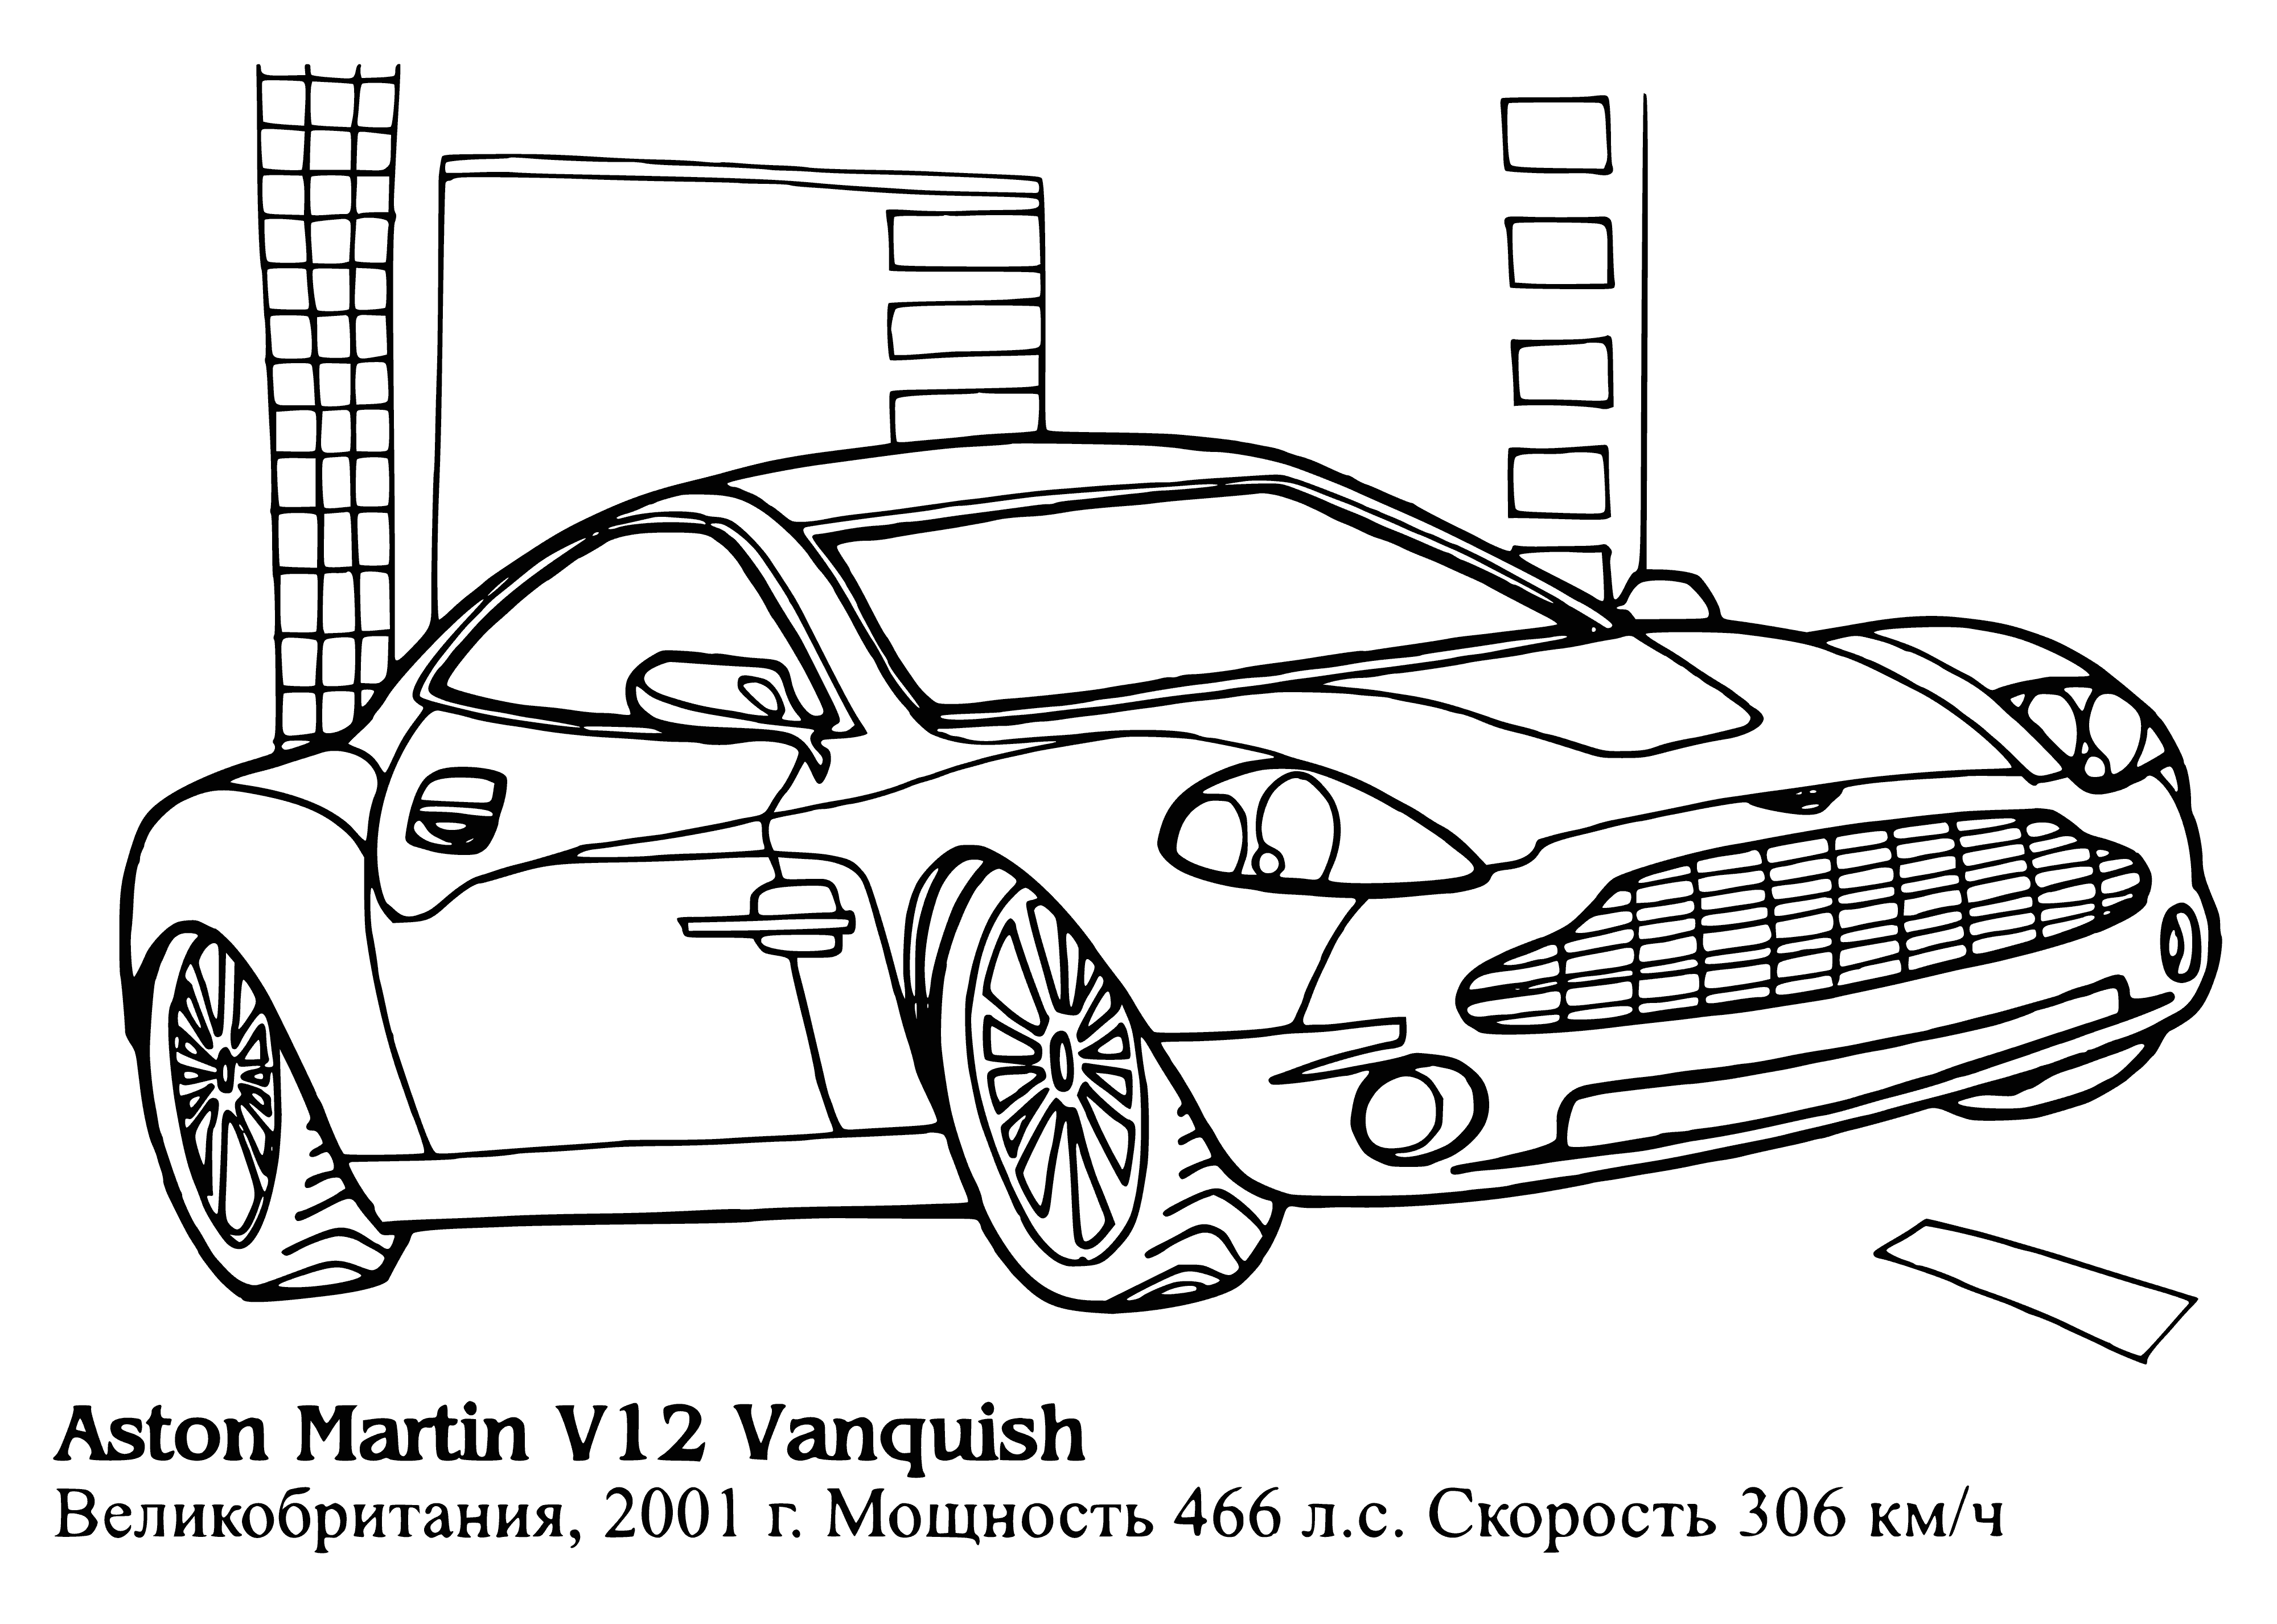 Aston Martin V12 Vanquish coloring page